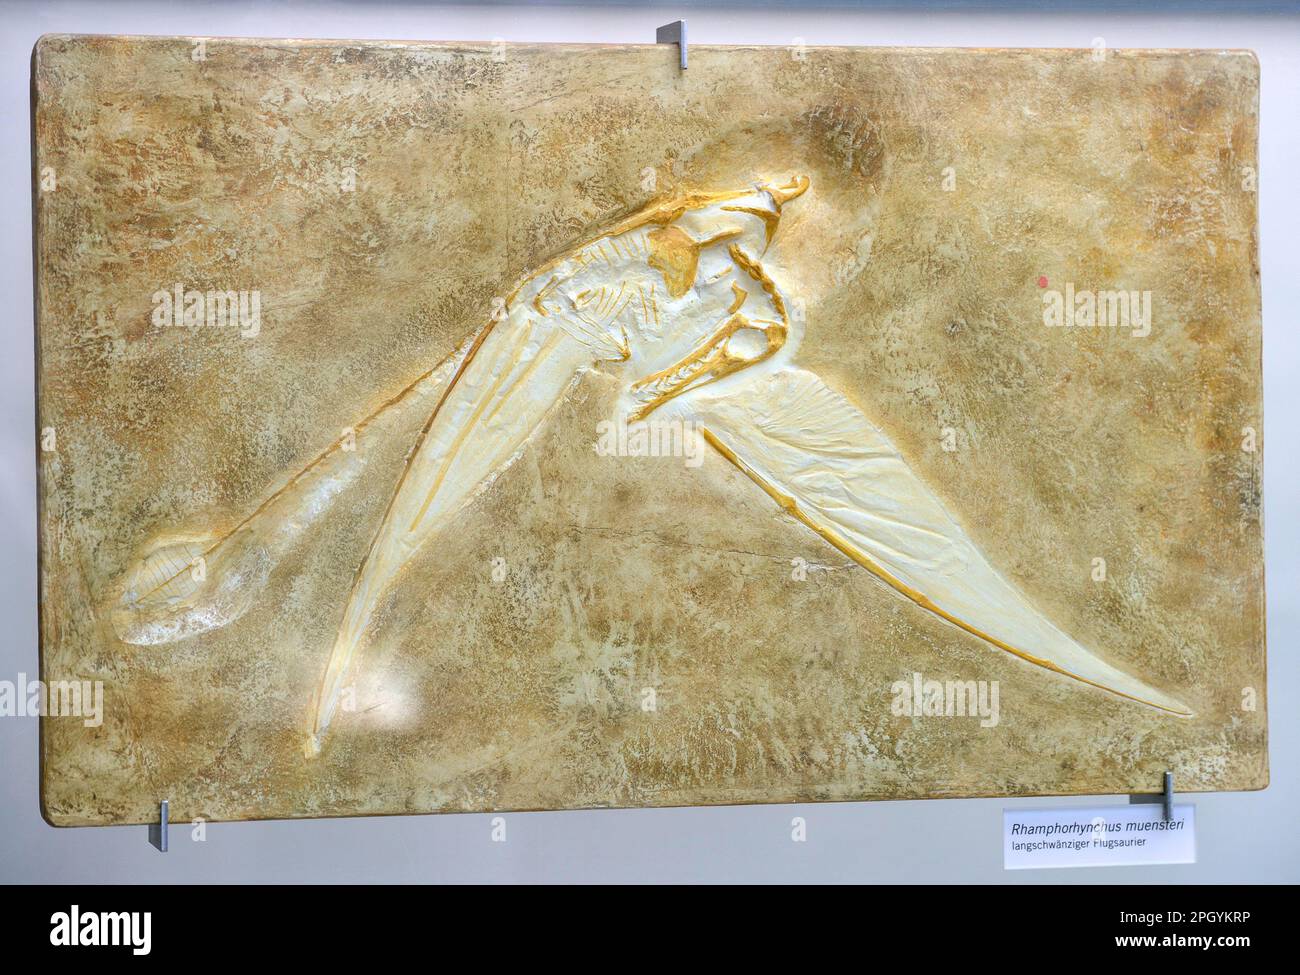 Fossilisation of a long-snouted pterosaur (Rhamphorhynchus muensteri), Museum fuer Naturkunde, Berlin, Germany Stock Photo